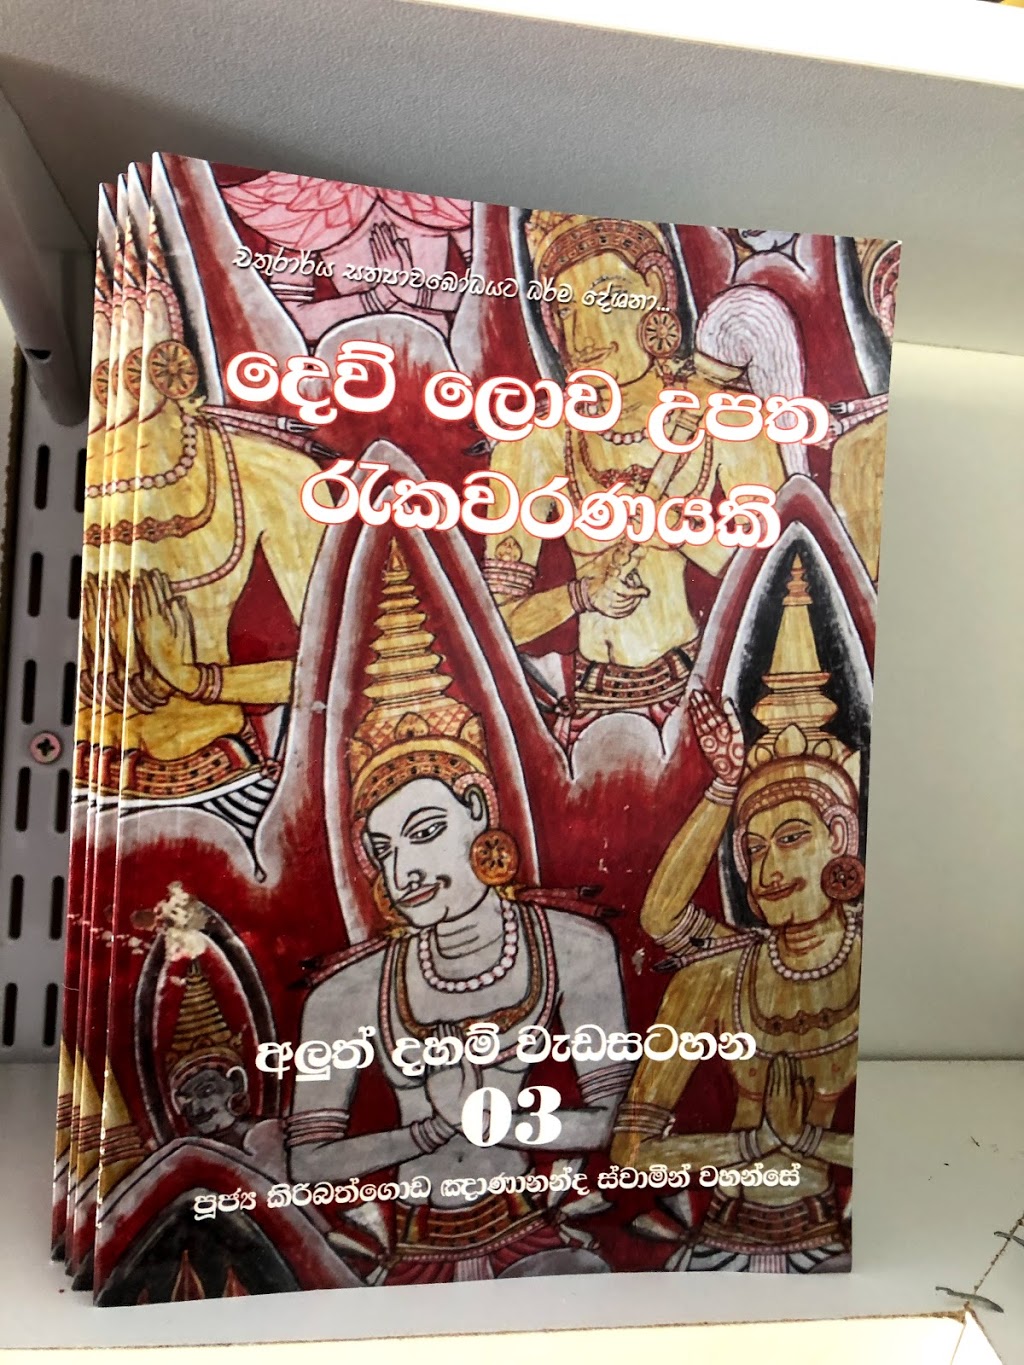 Buddhist Book Shop | Mount Evelyn VIC 3796, Australia | Phone: (03) 9736 3937